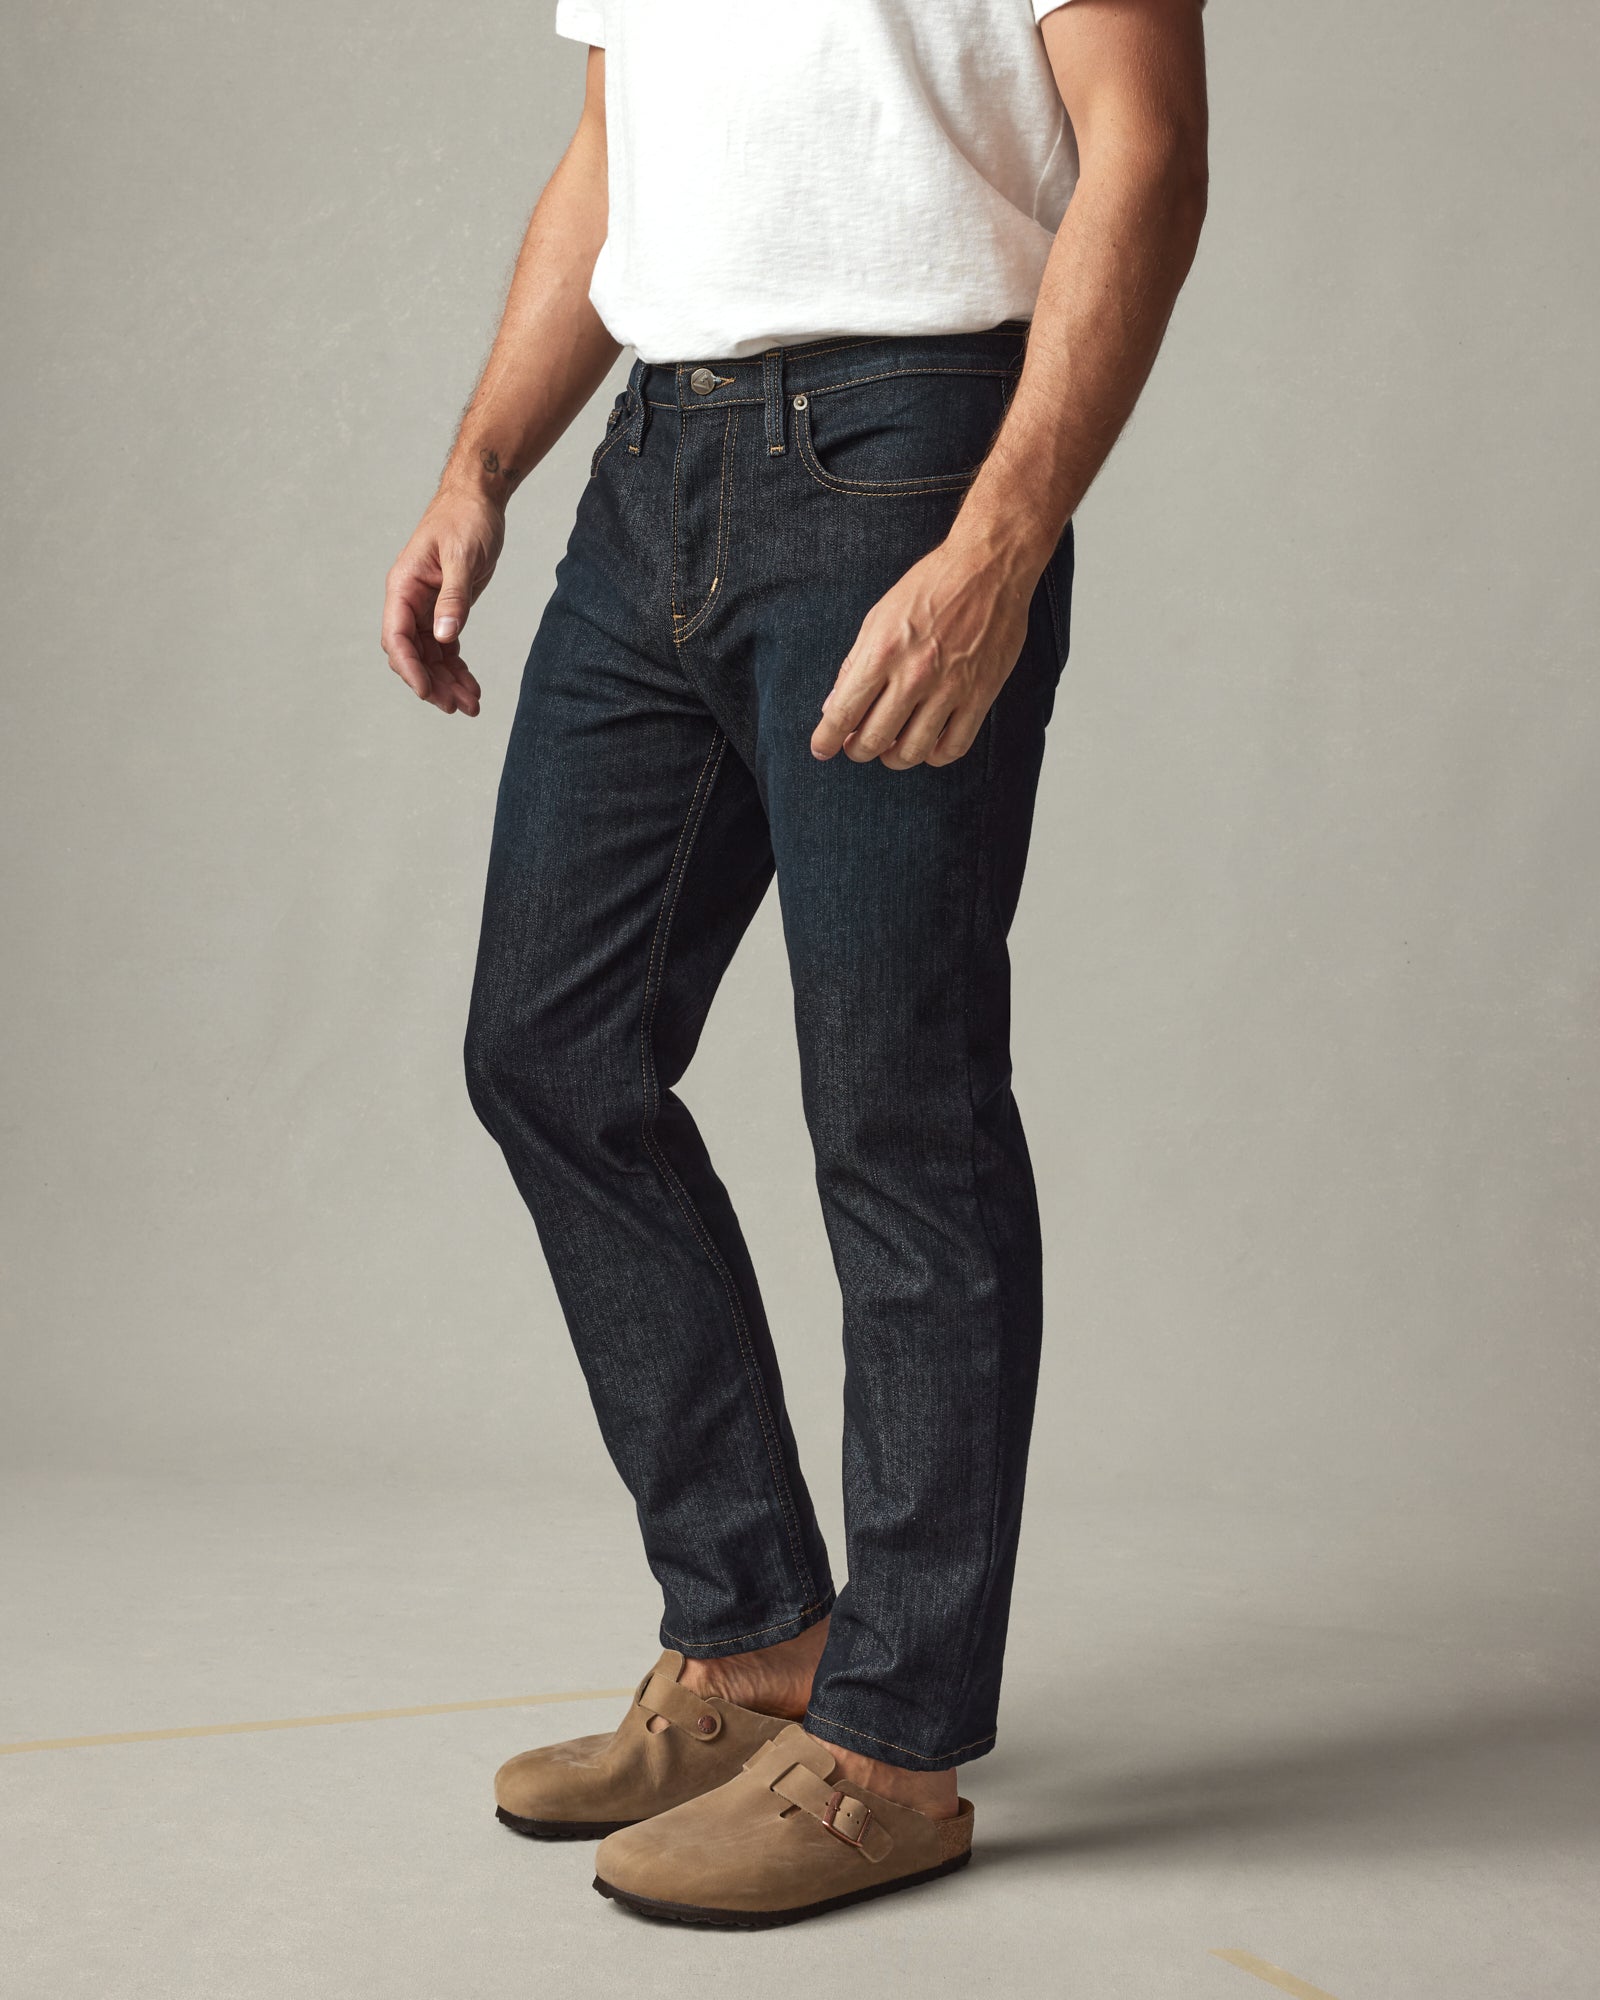 Men's Jeans Straight Regular Denim Jeans With Pockets, Men's